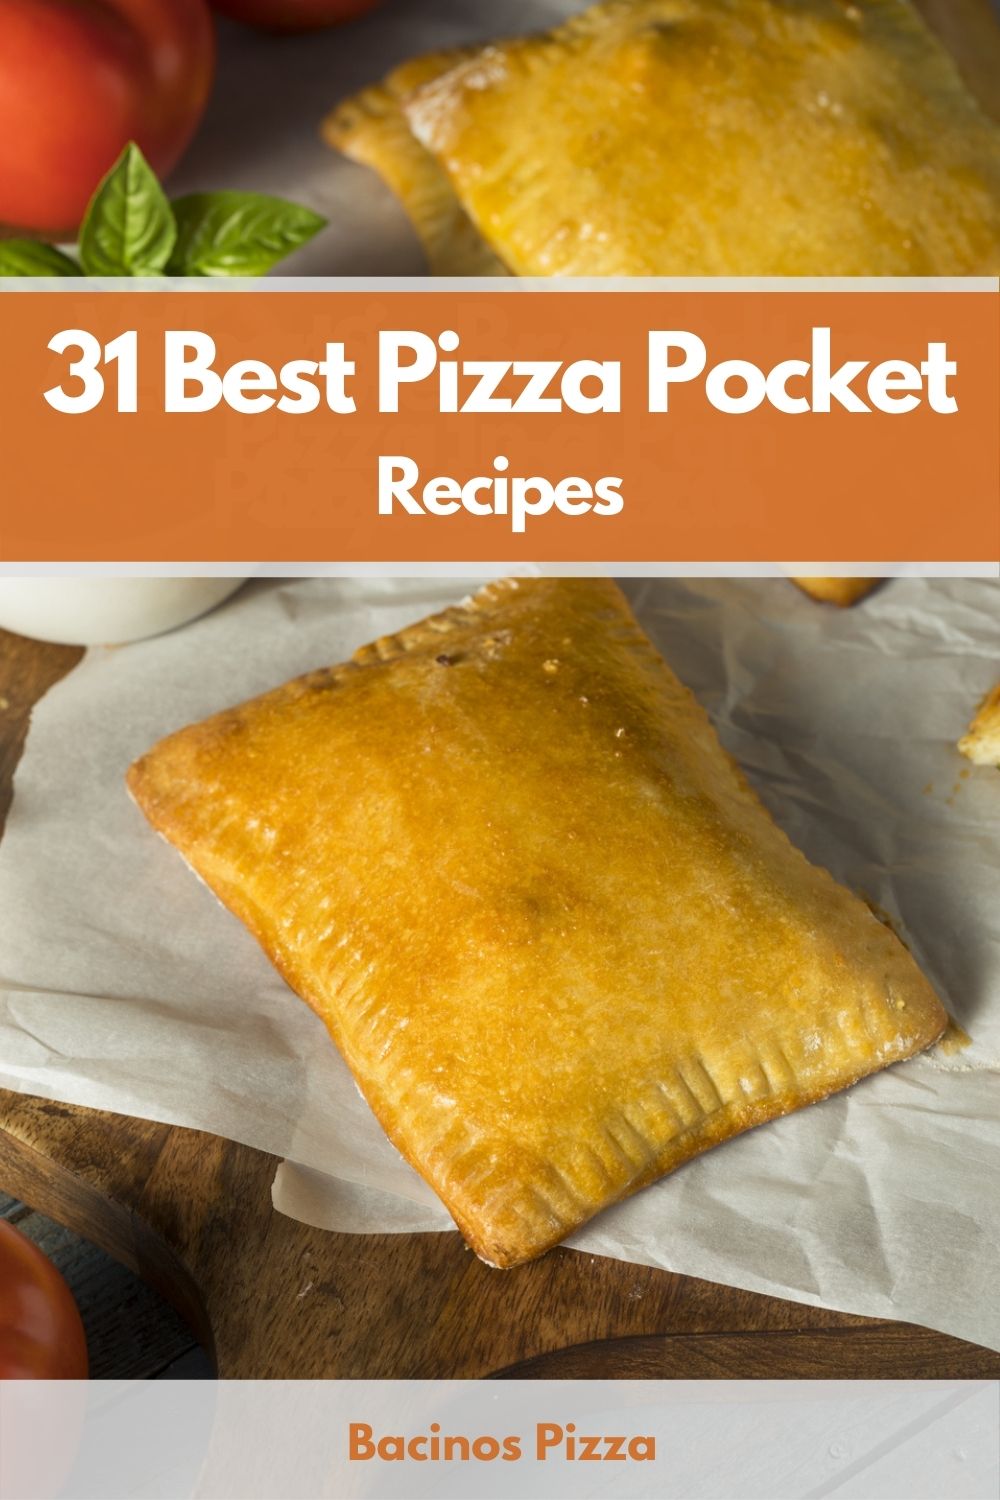 31 Best Pizza Pocket Recipes pin